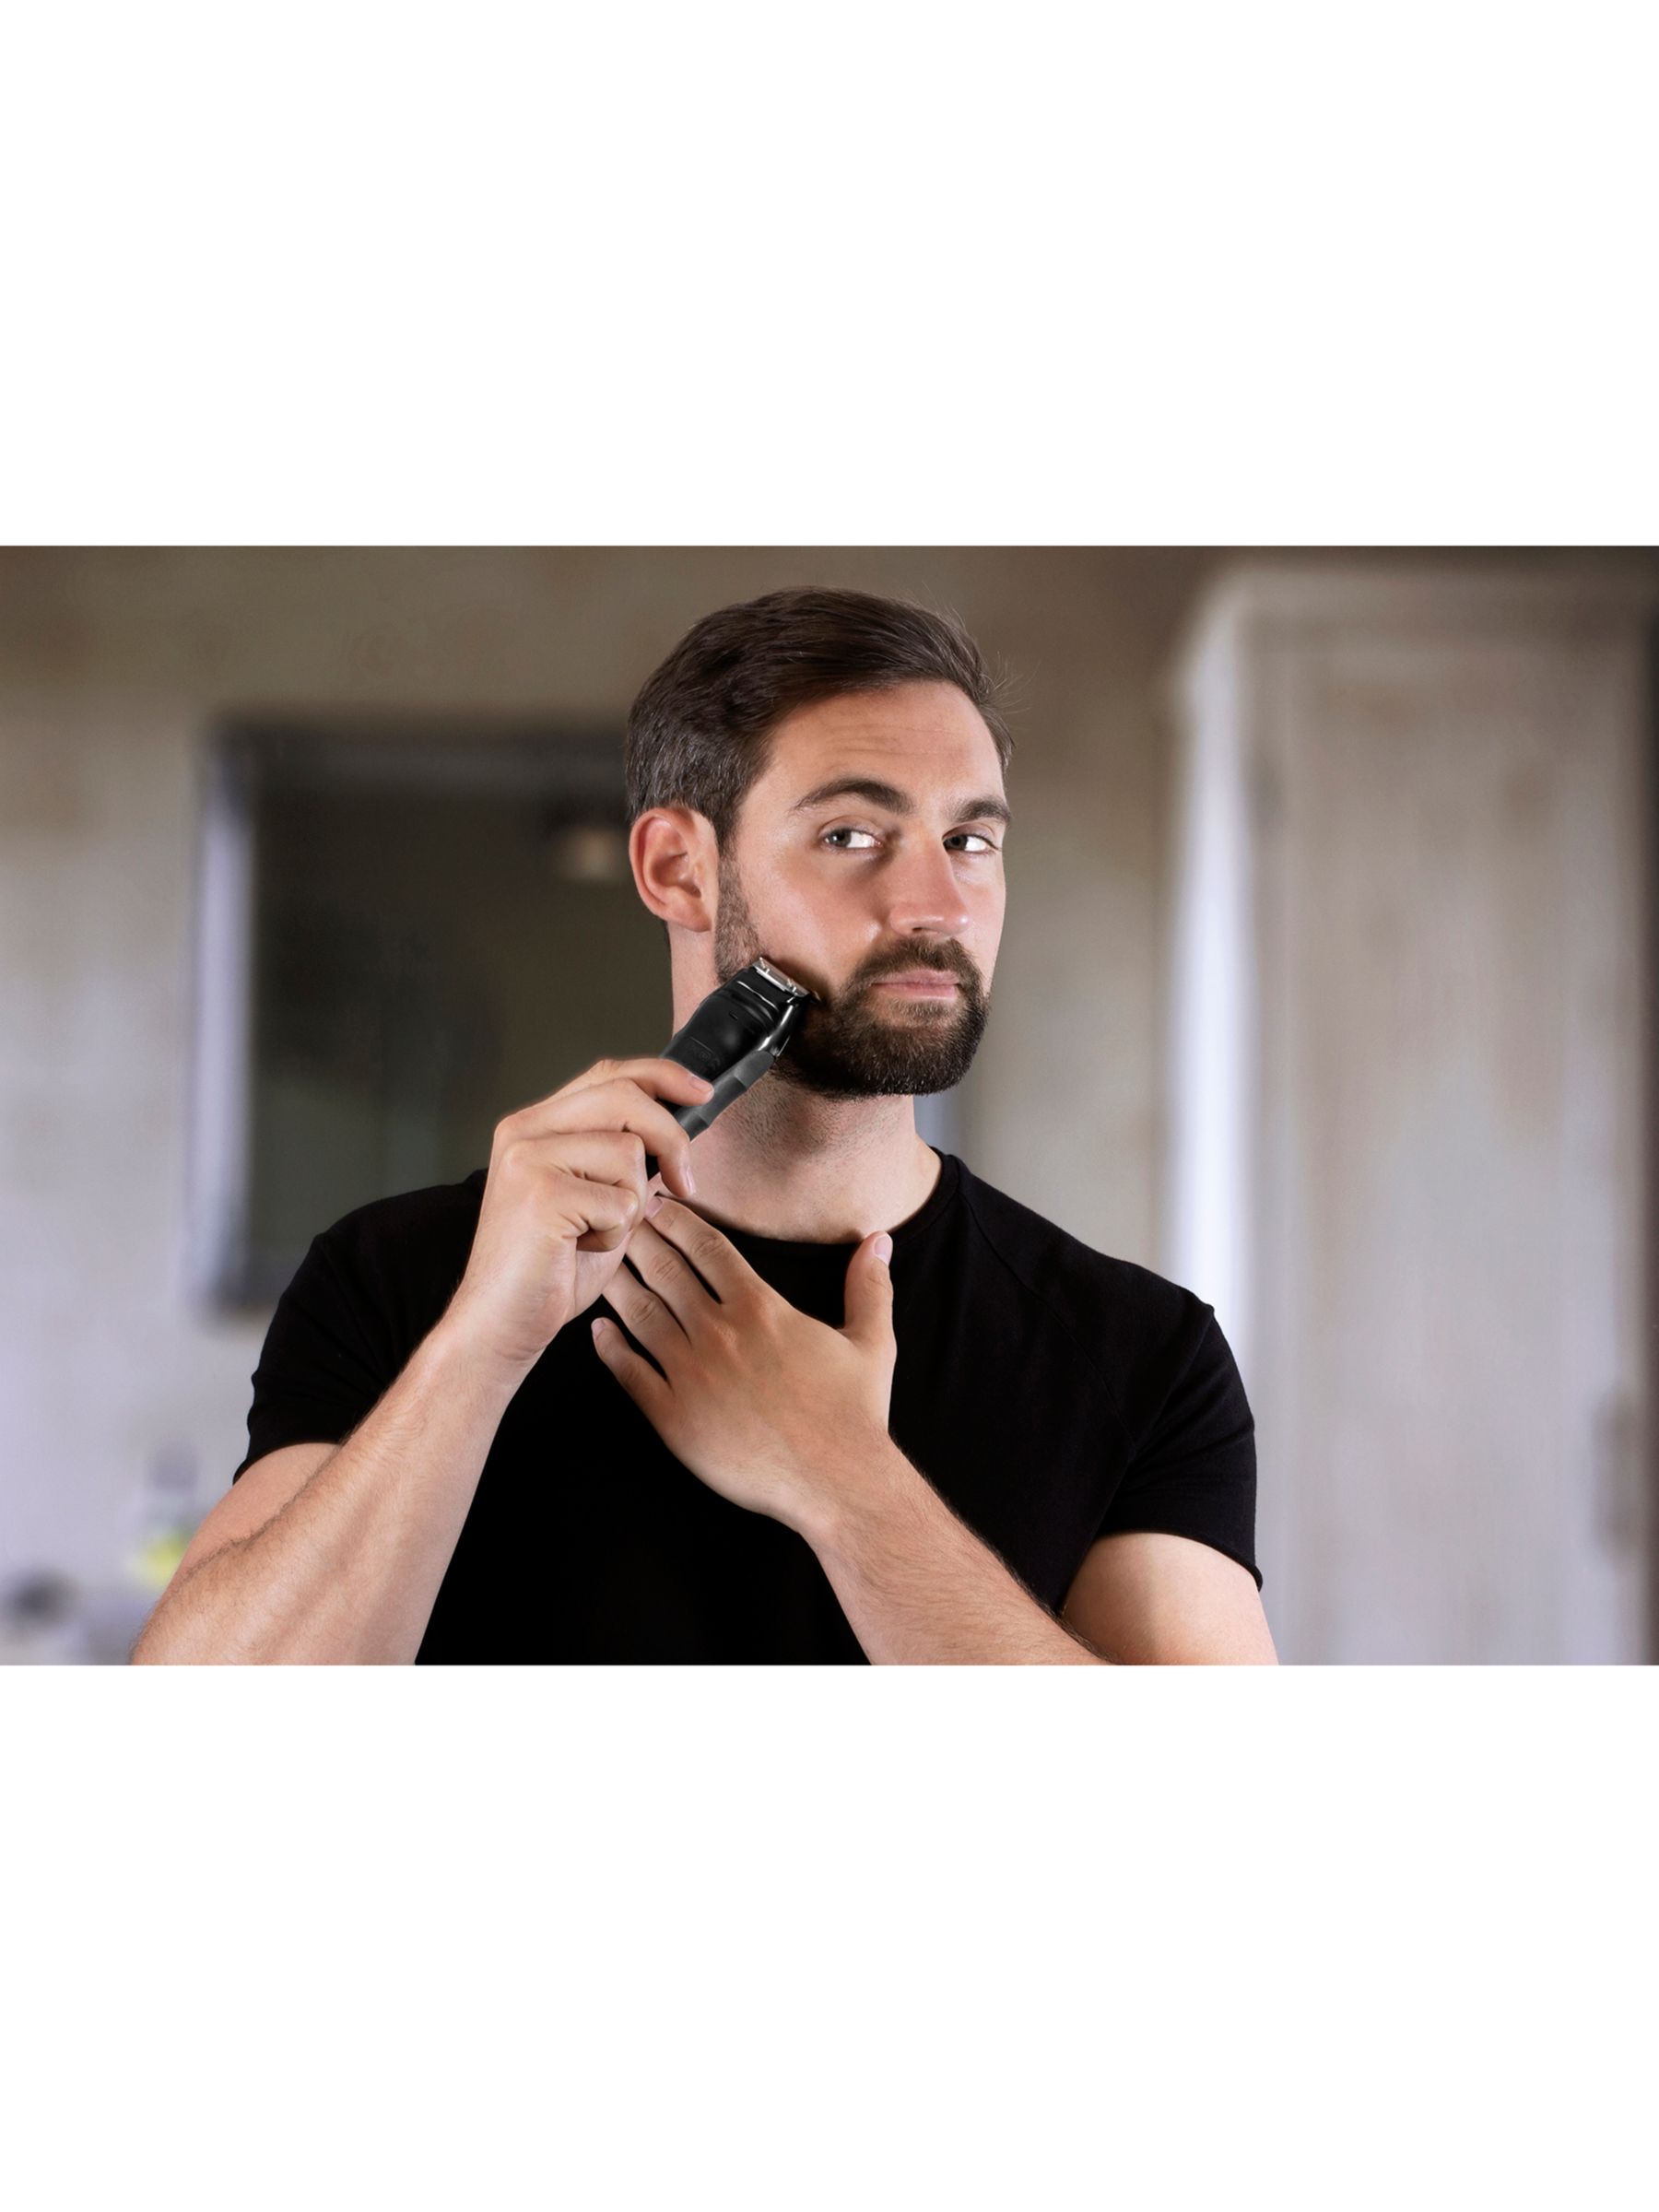 wahl wet dry beard trimmer